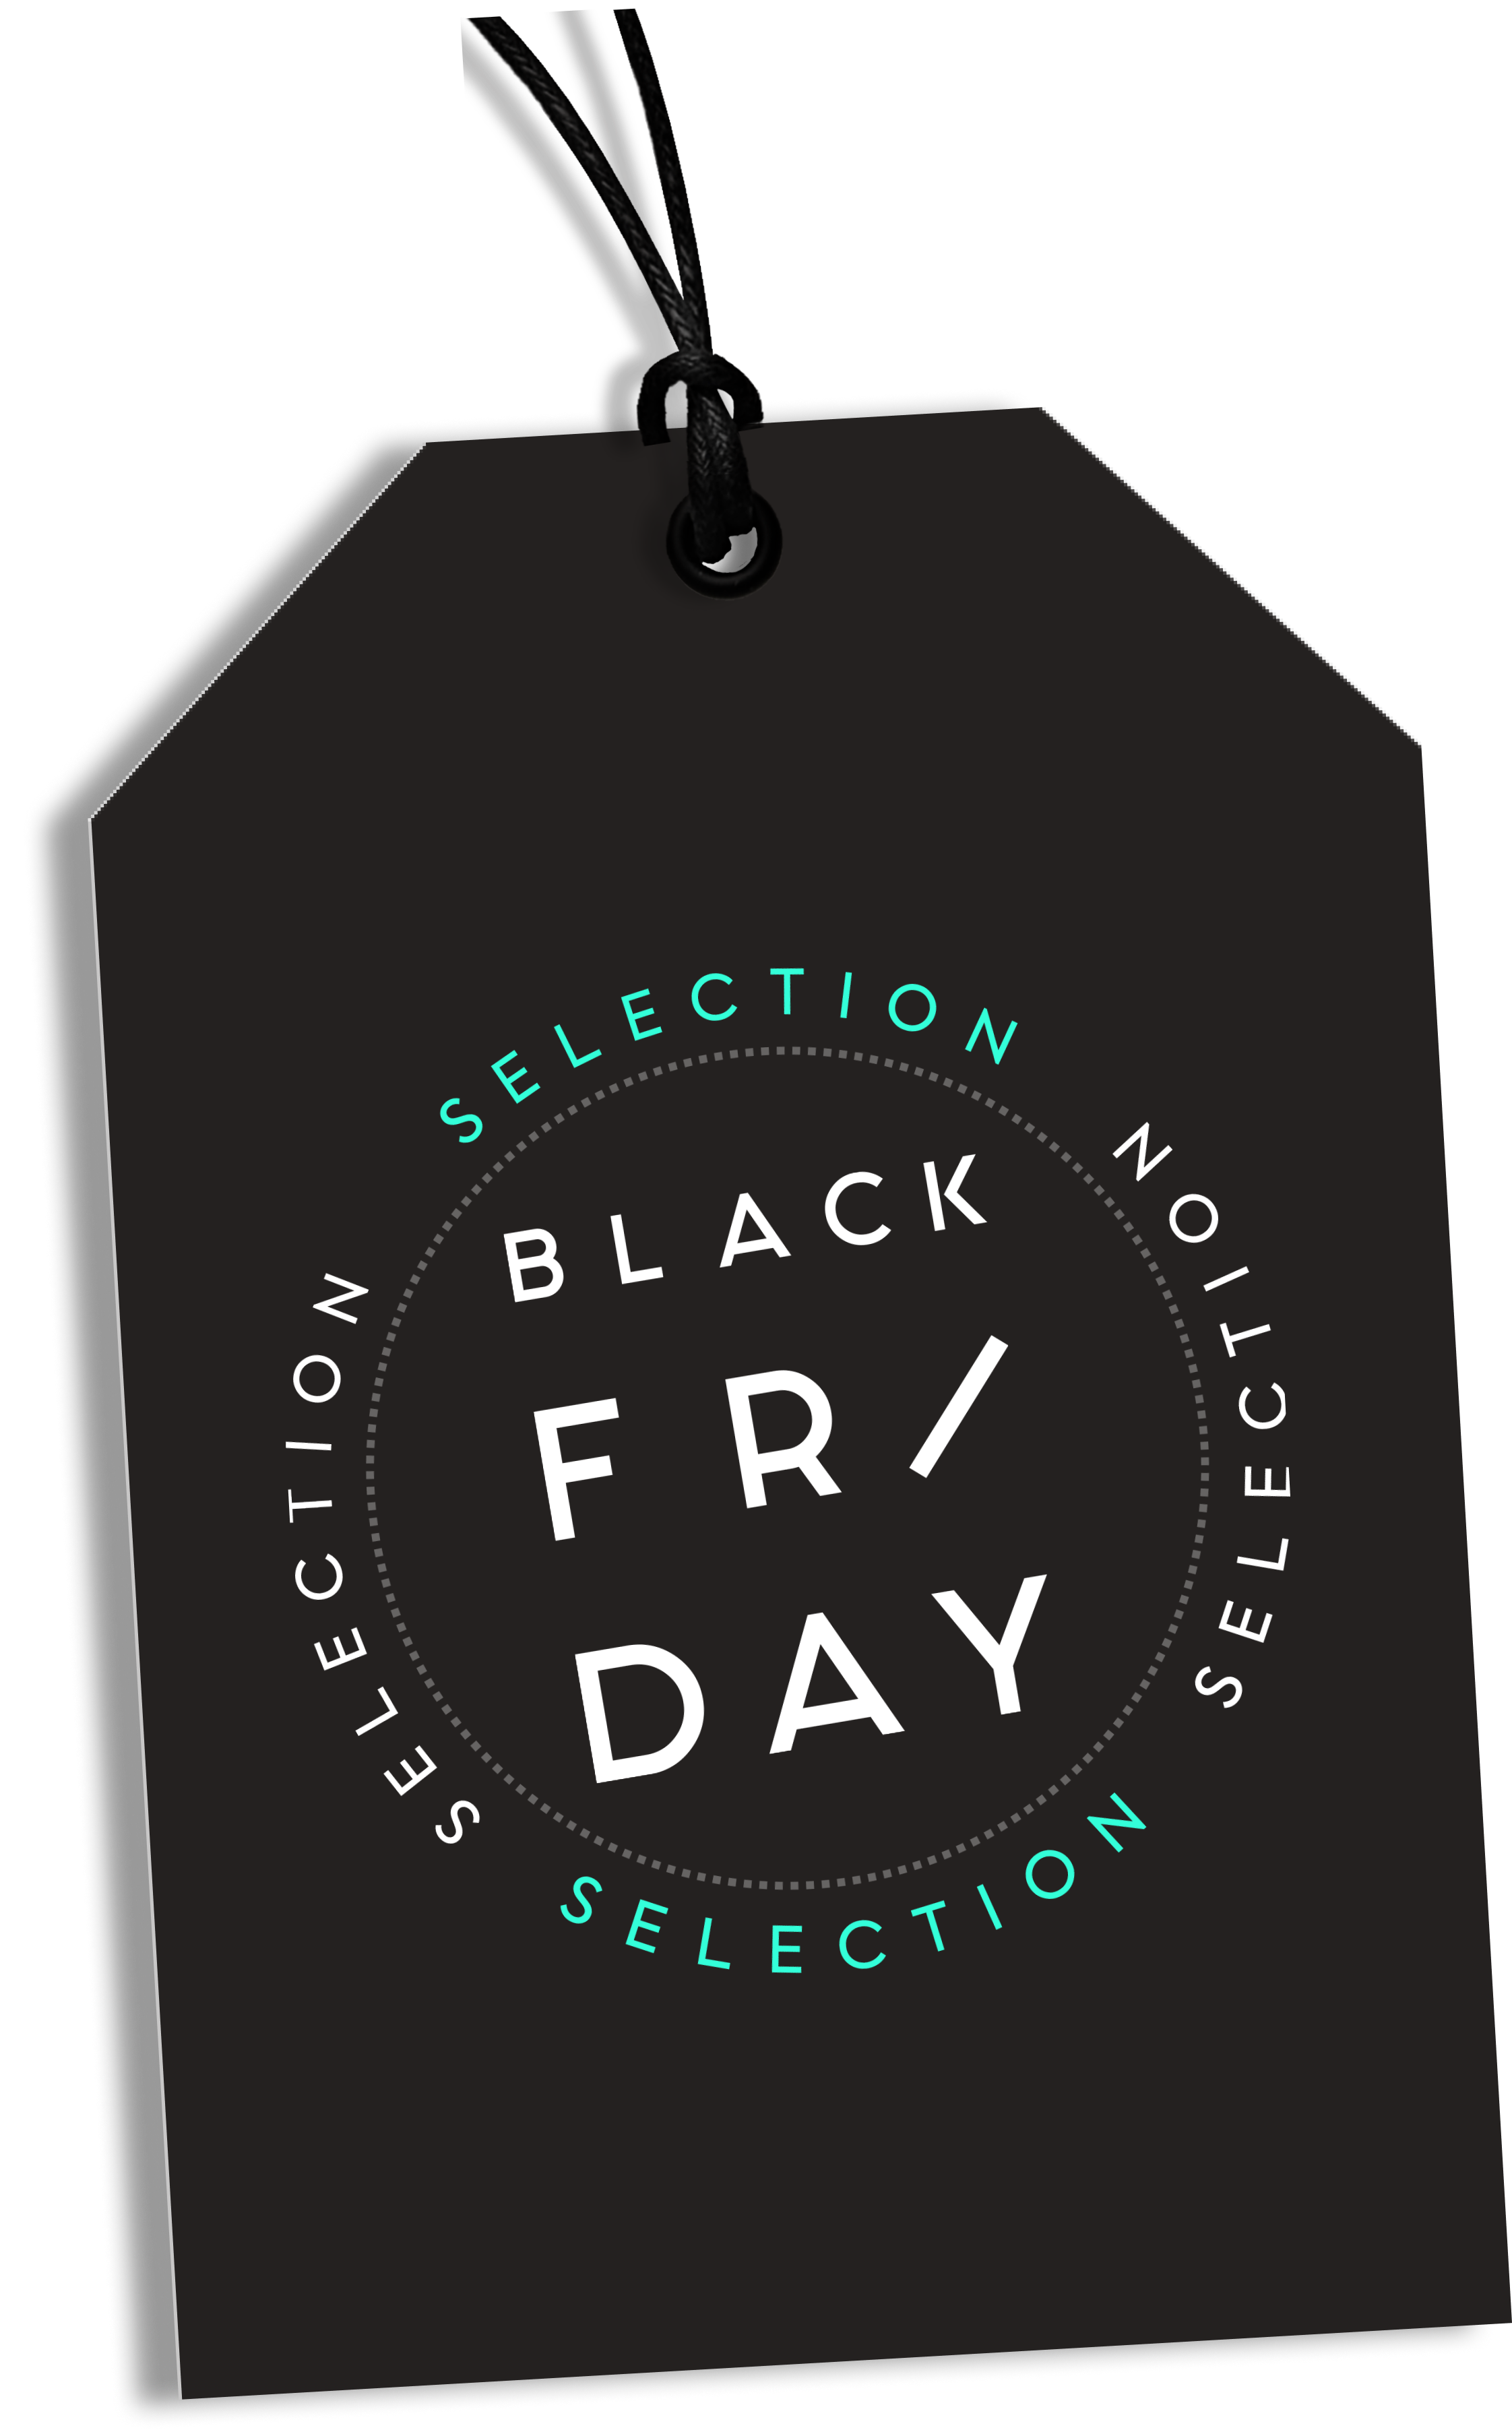 Tag Black Friday Selection